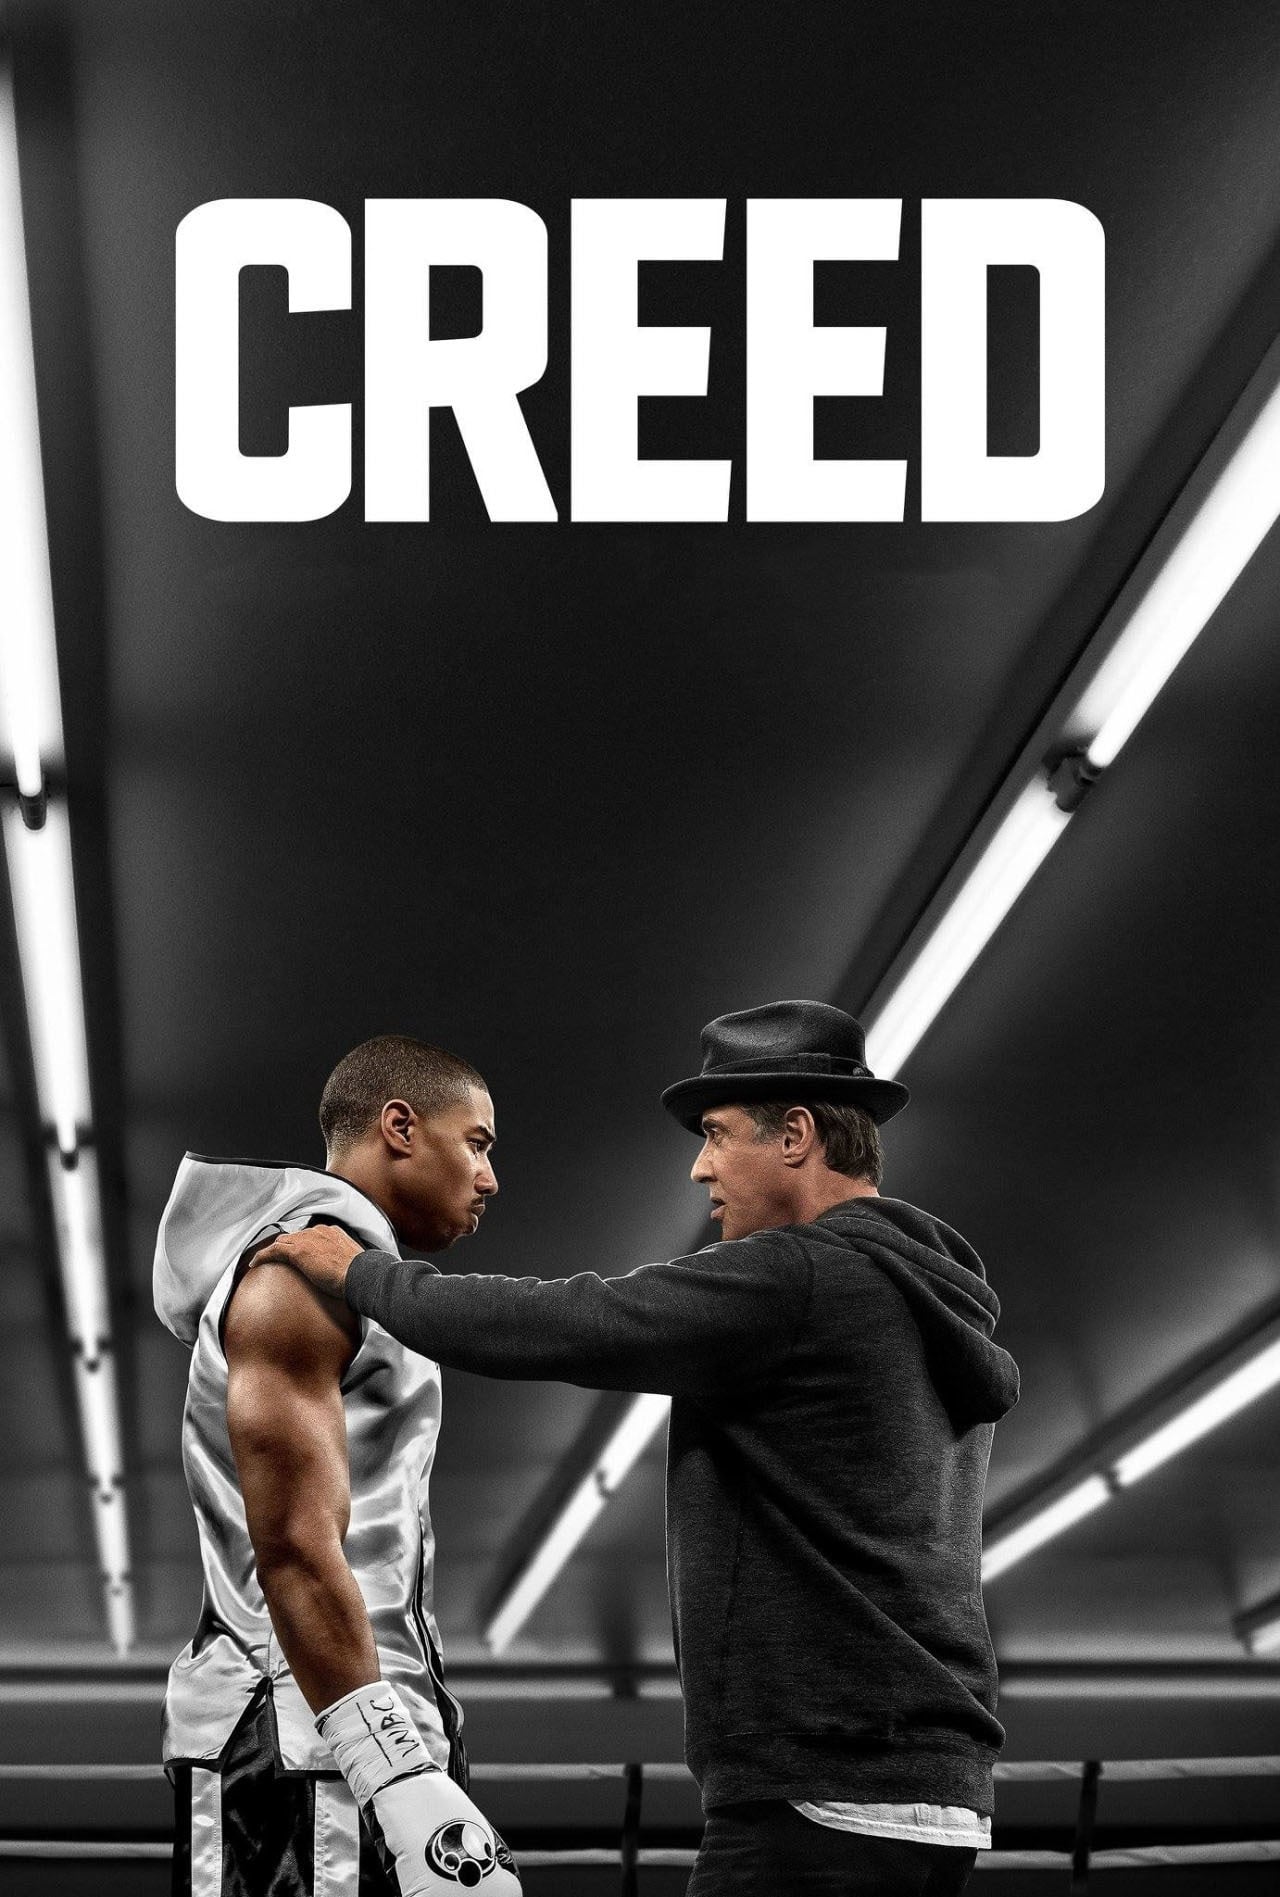 Creed - L'Héritage de Rocky Balboa